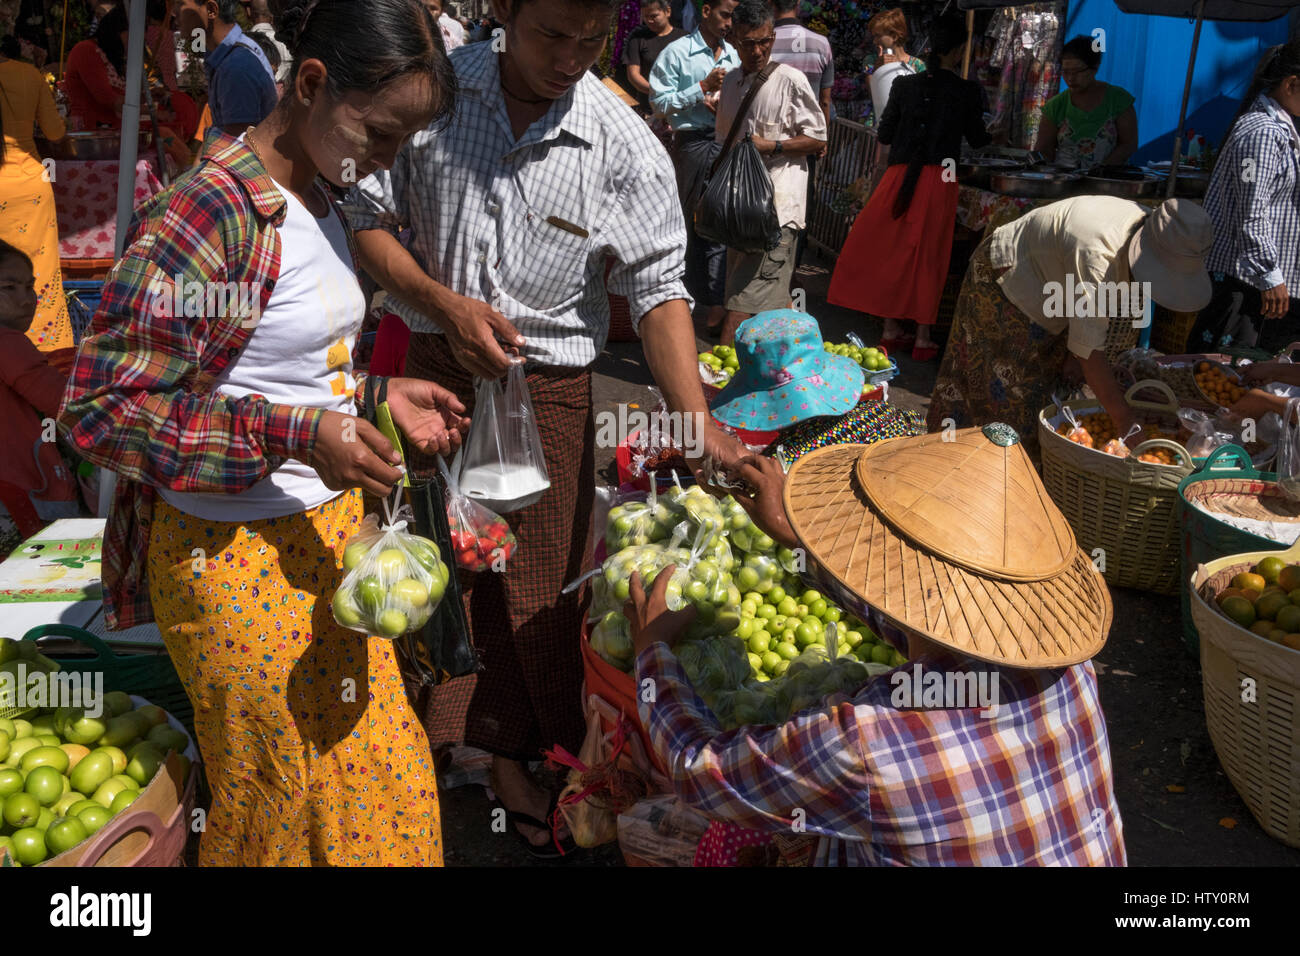 Shoppers at a fruit and vegetable market in Maha Bandoola Road Yangon, Yangon Region, Myanmar Stock Photo